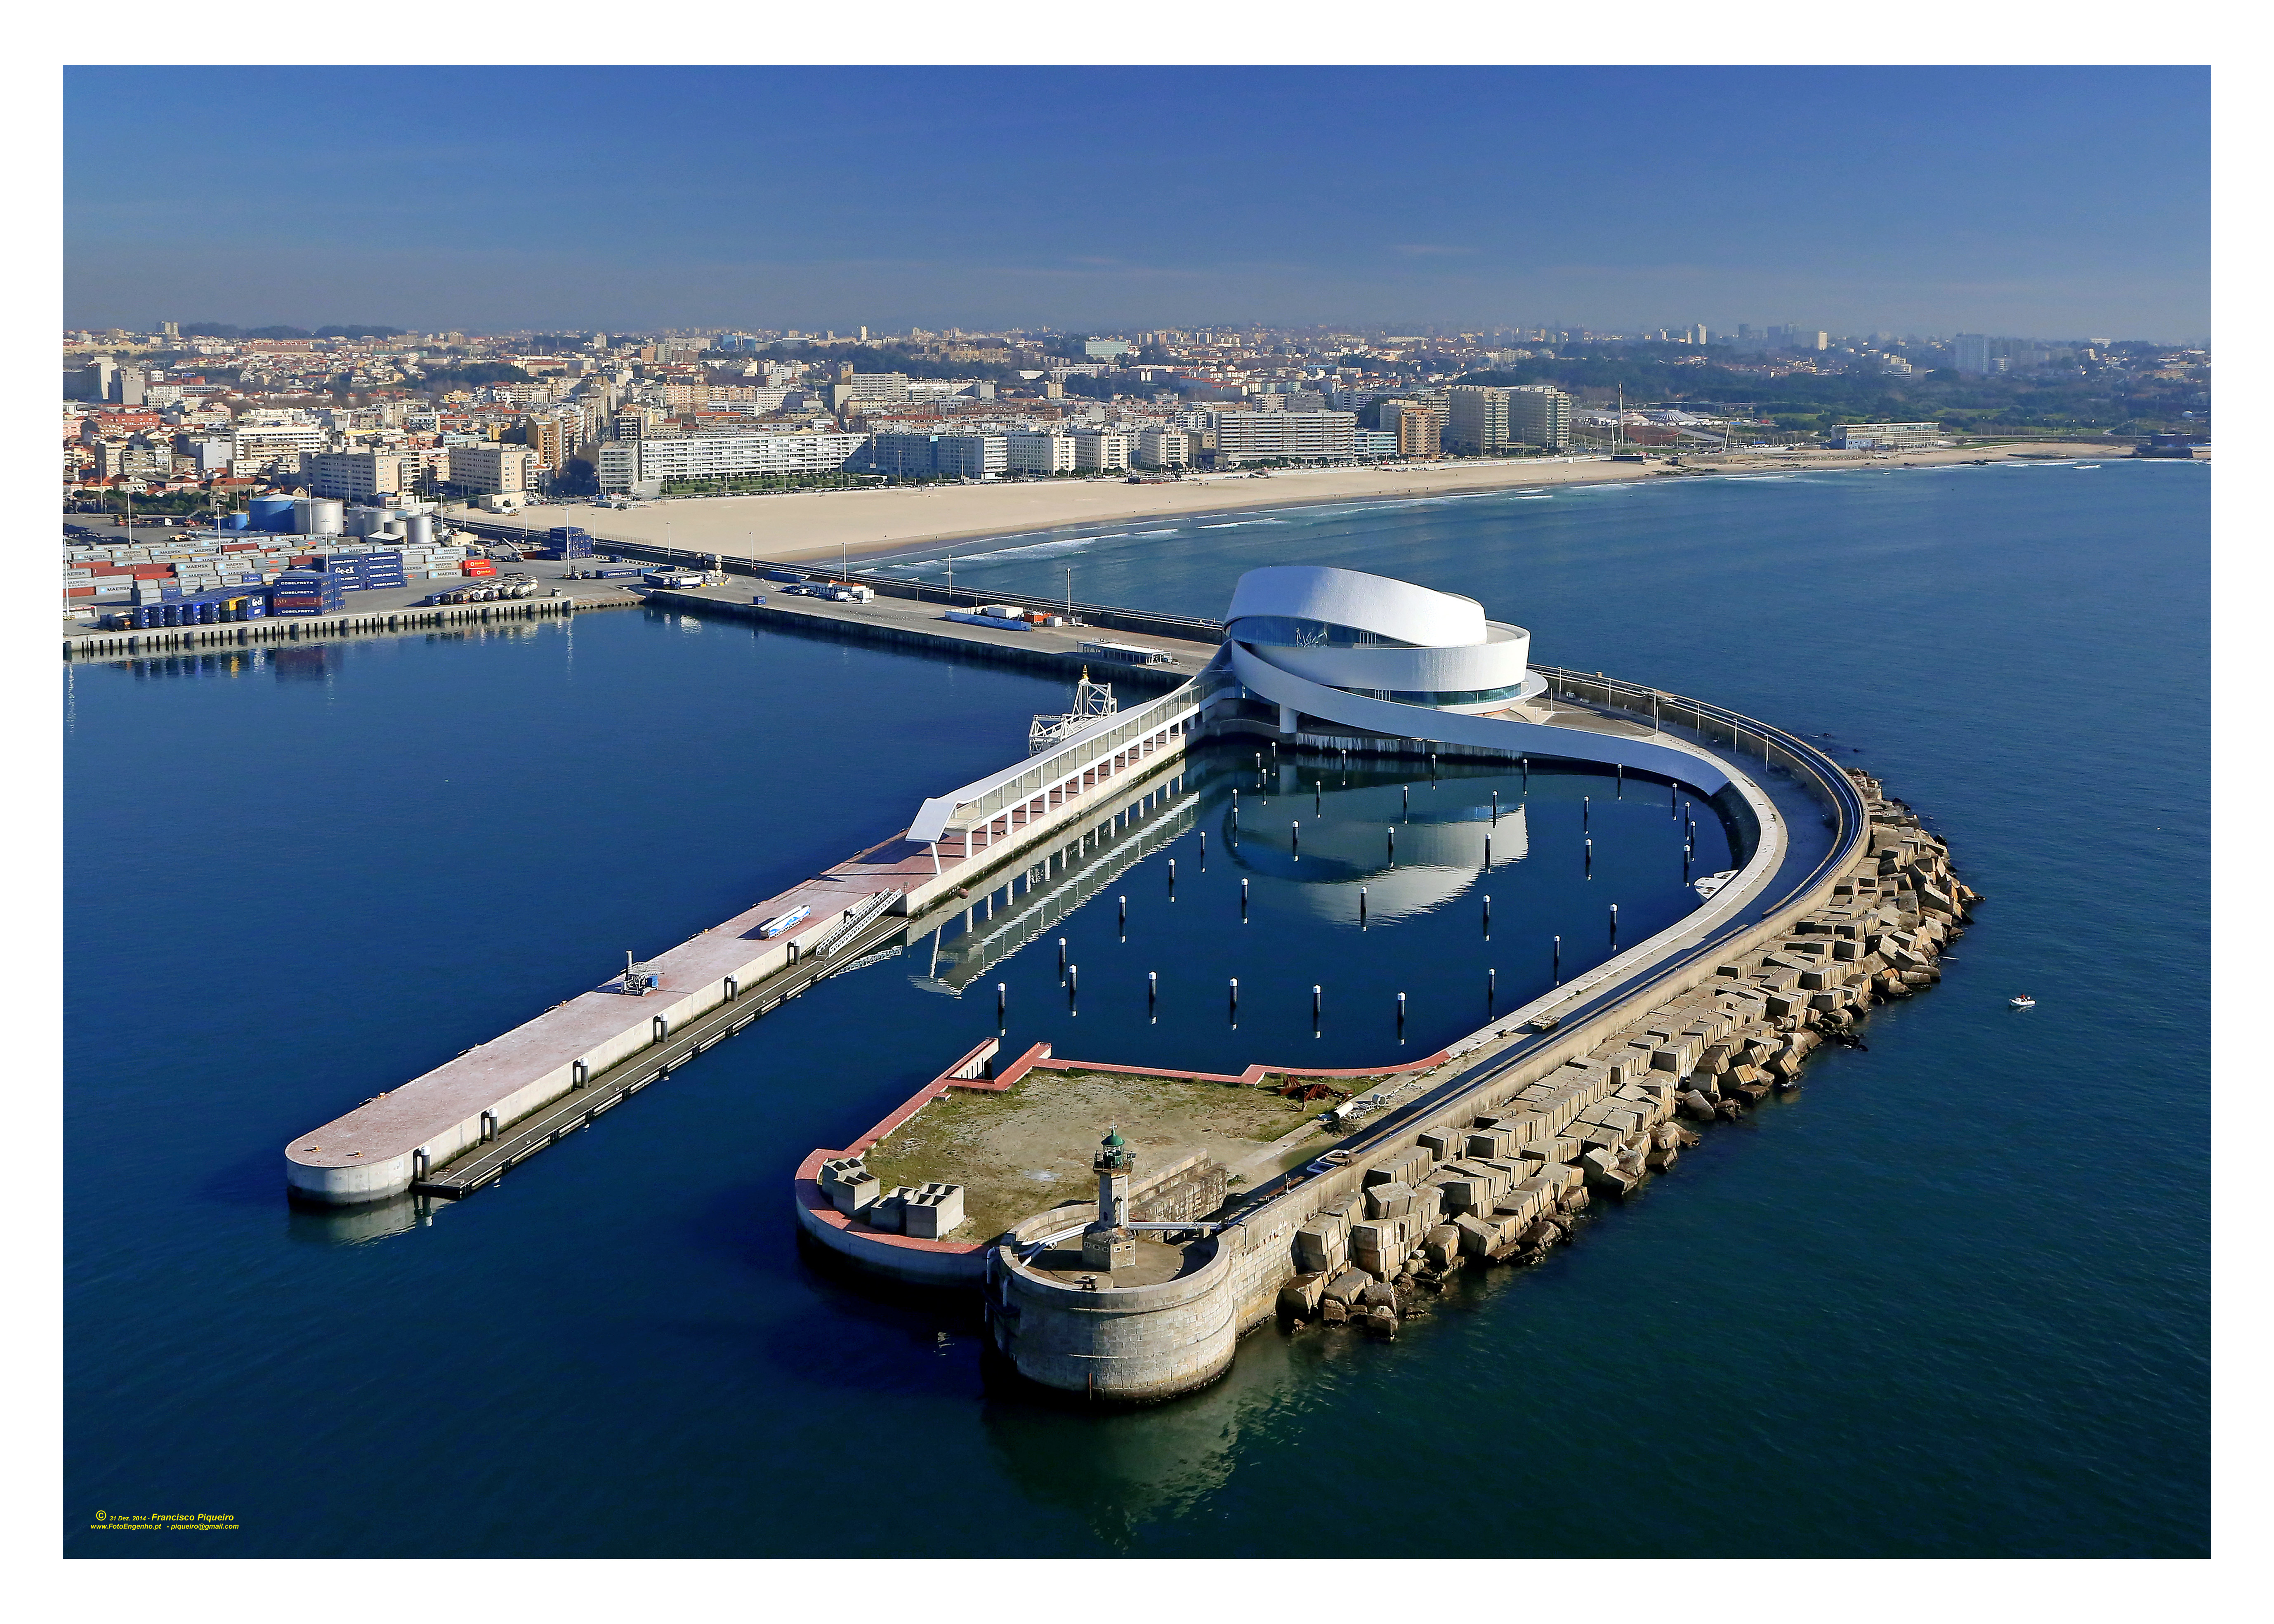 Porto Cruise Terminal welcomes you.